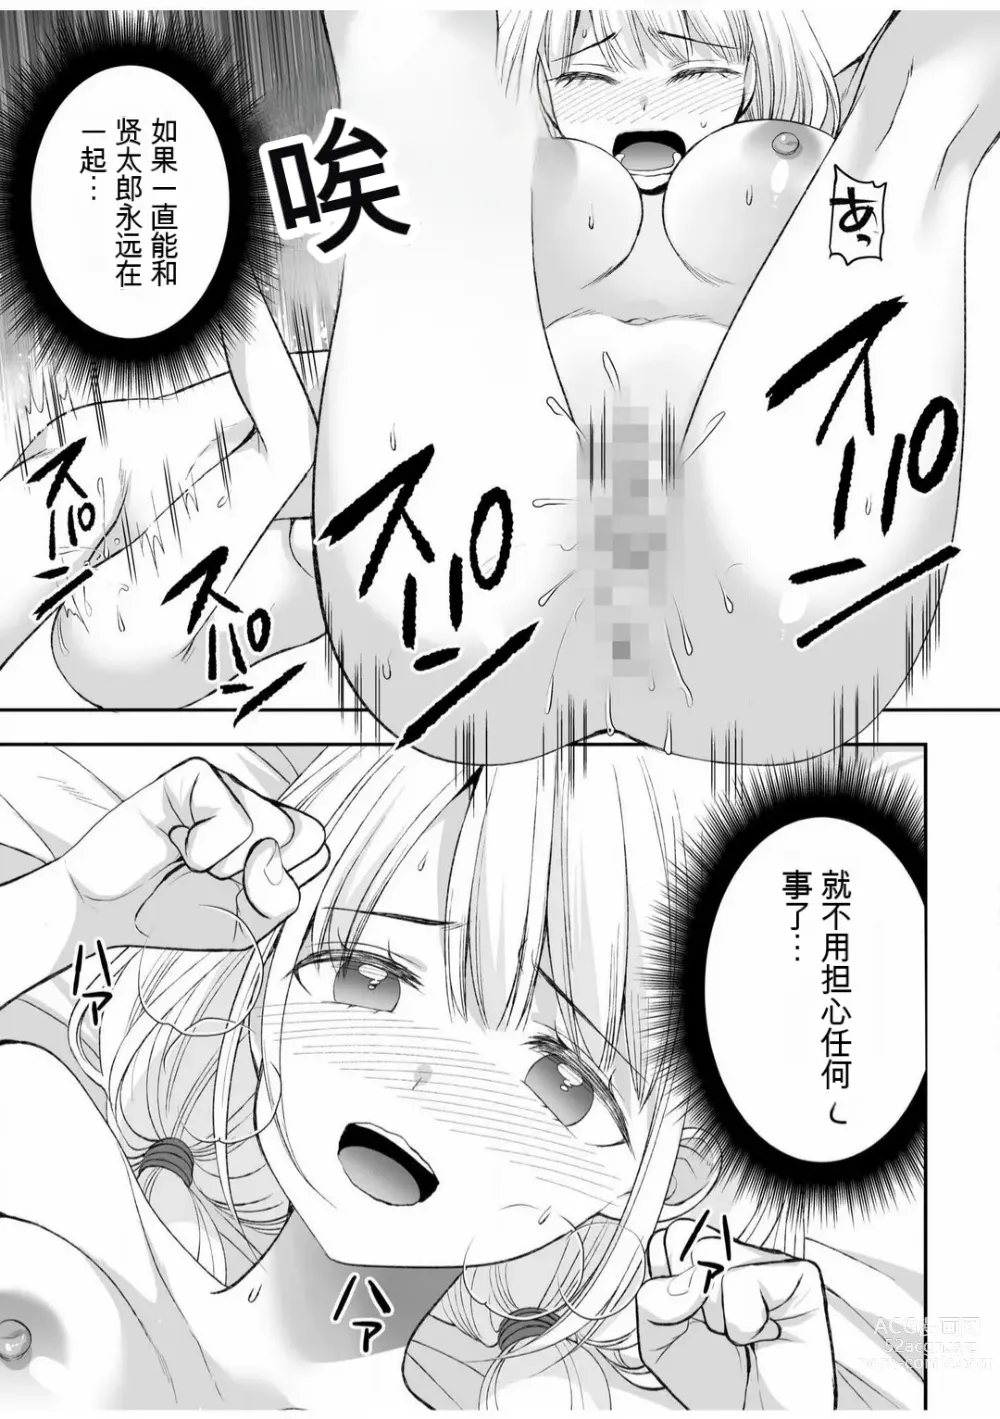 Page 247 of manga 「不要...不要进来太多...」〜冷酷攻略系的青梅竹马和义兄妹〜SEX〜【18禁】 1-10【GPT翻译】